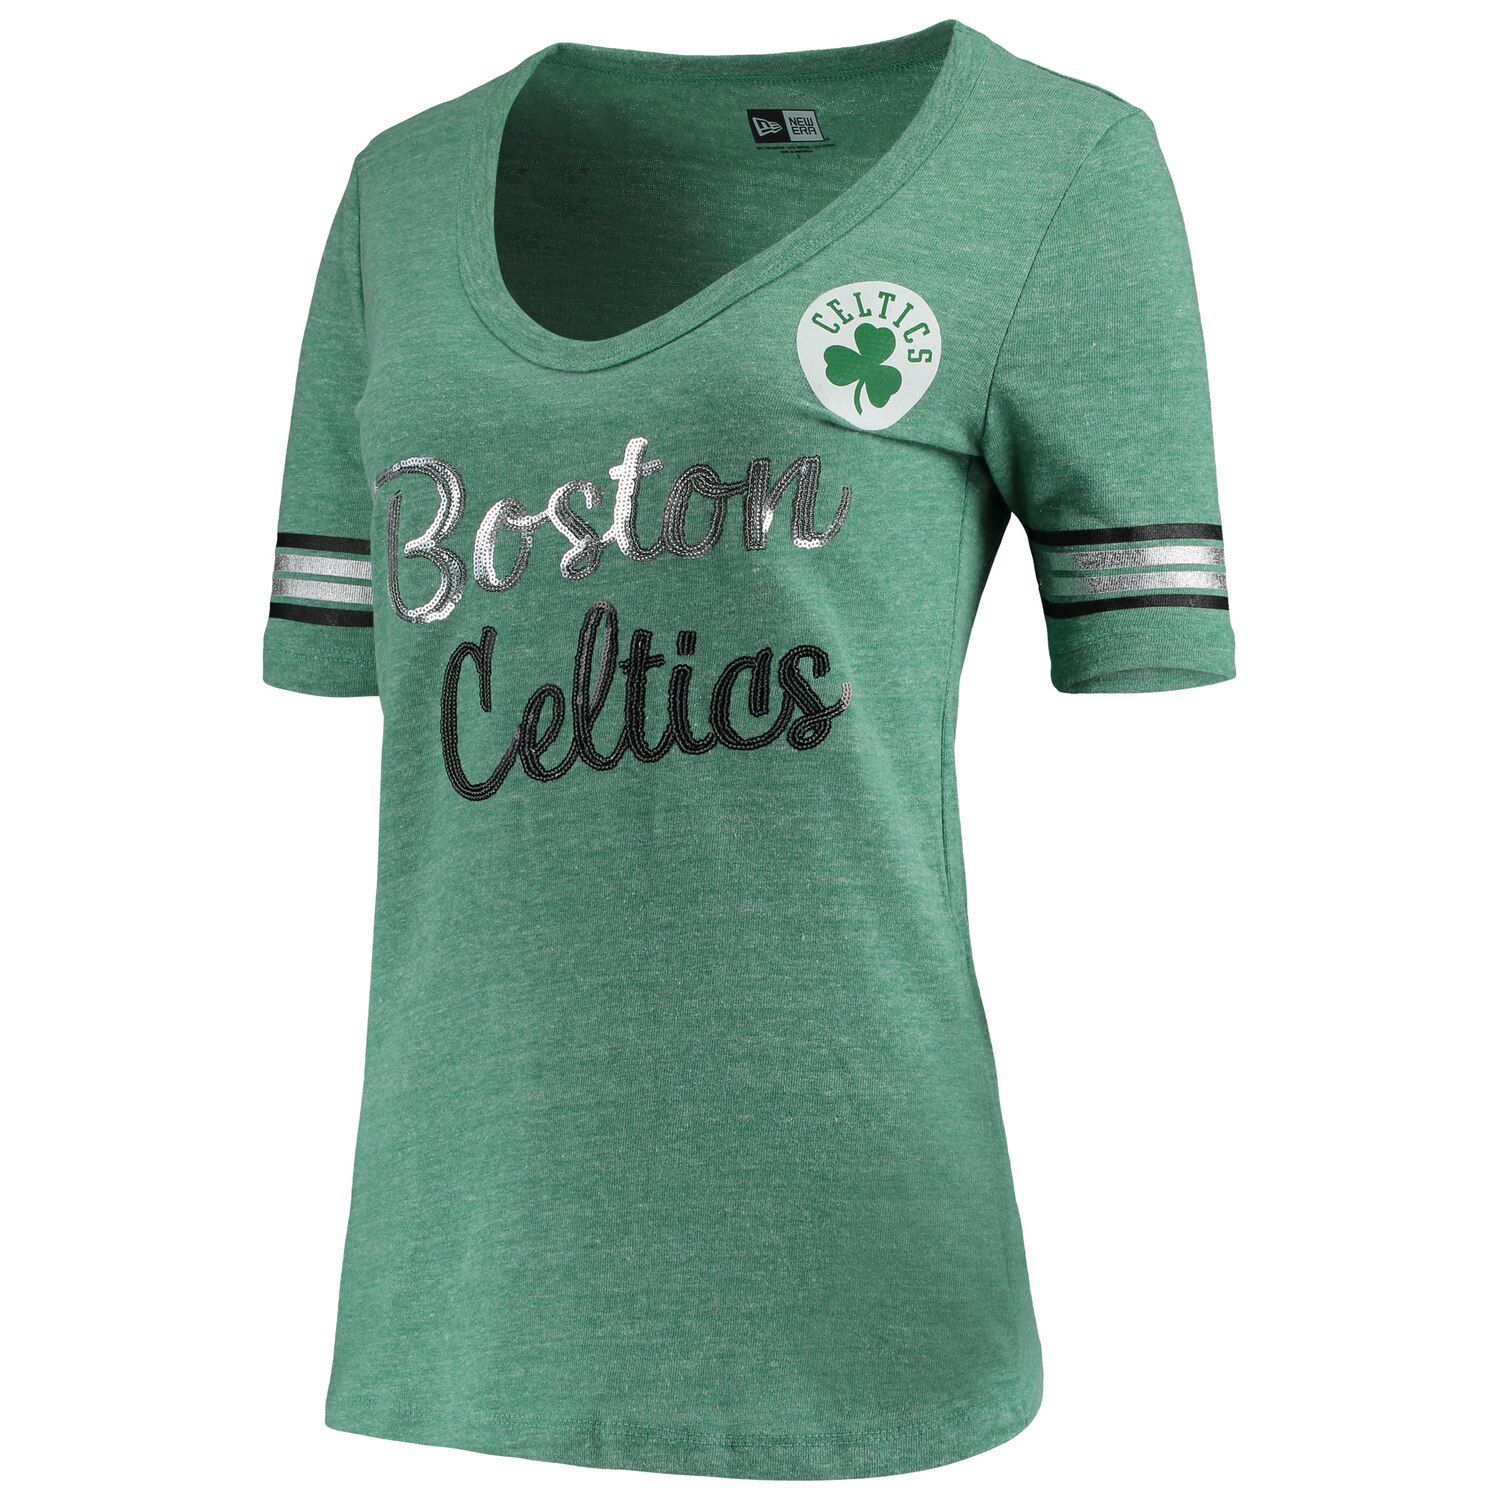 kohl's boston celtics apparel